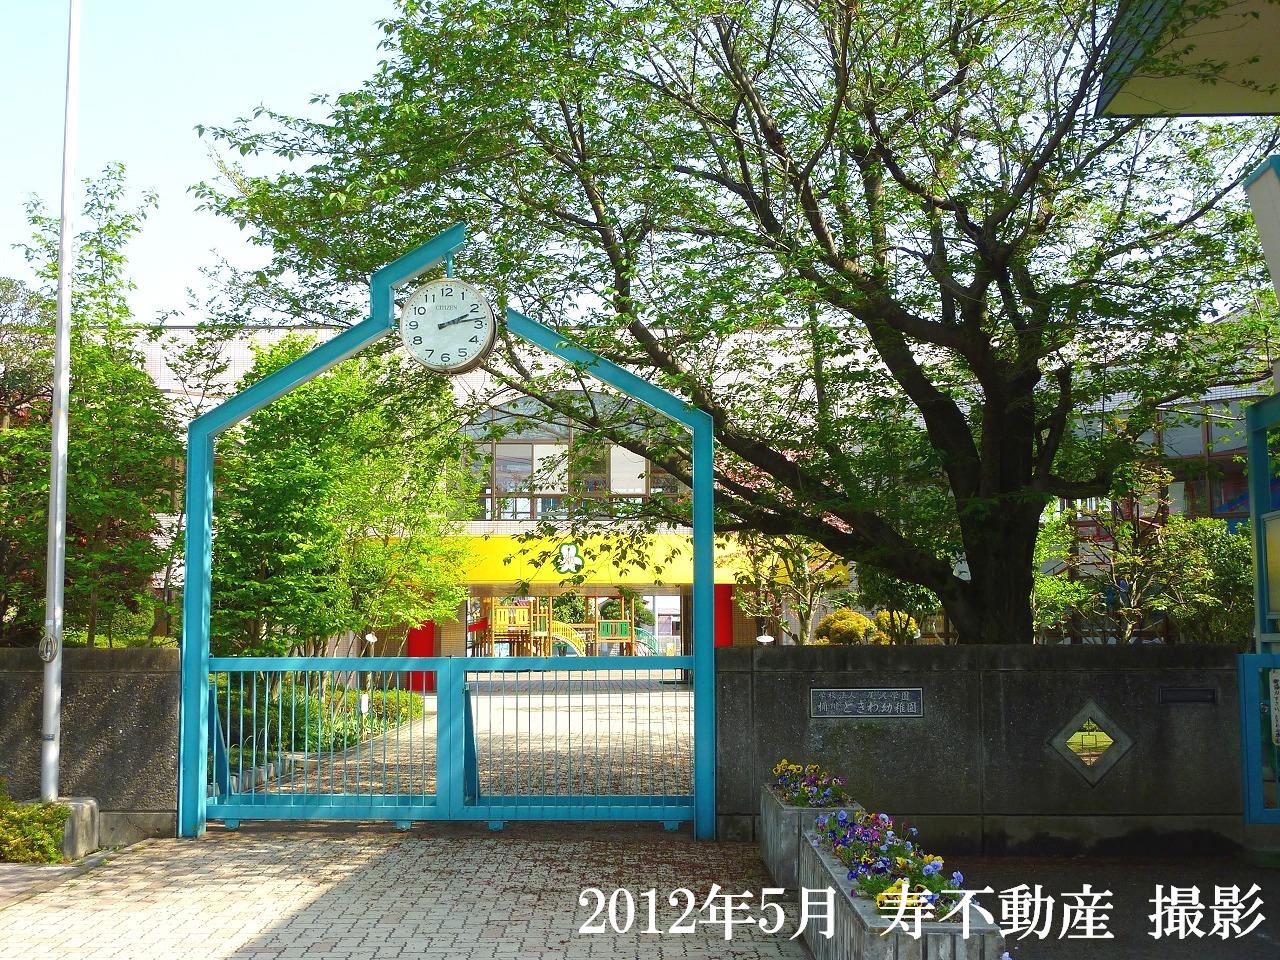 kindergarten ・ Nursery. Okegawa Tokiwa kindergarten (kindergarten ・ 426m to the nursery)